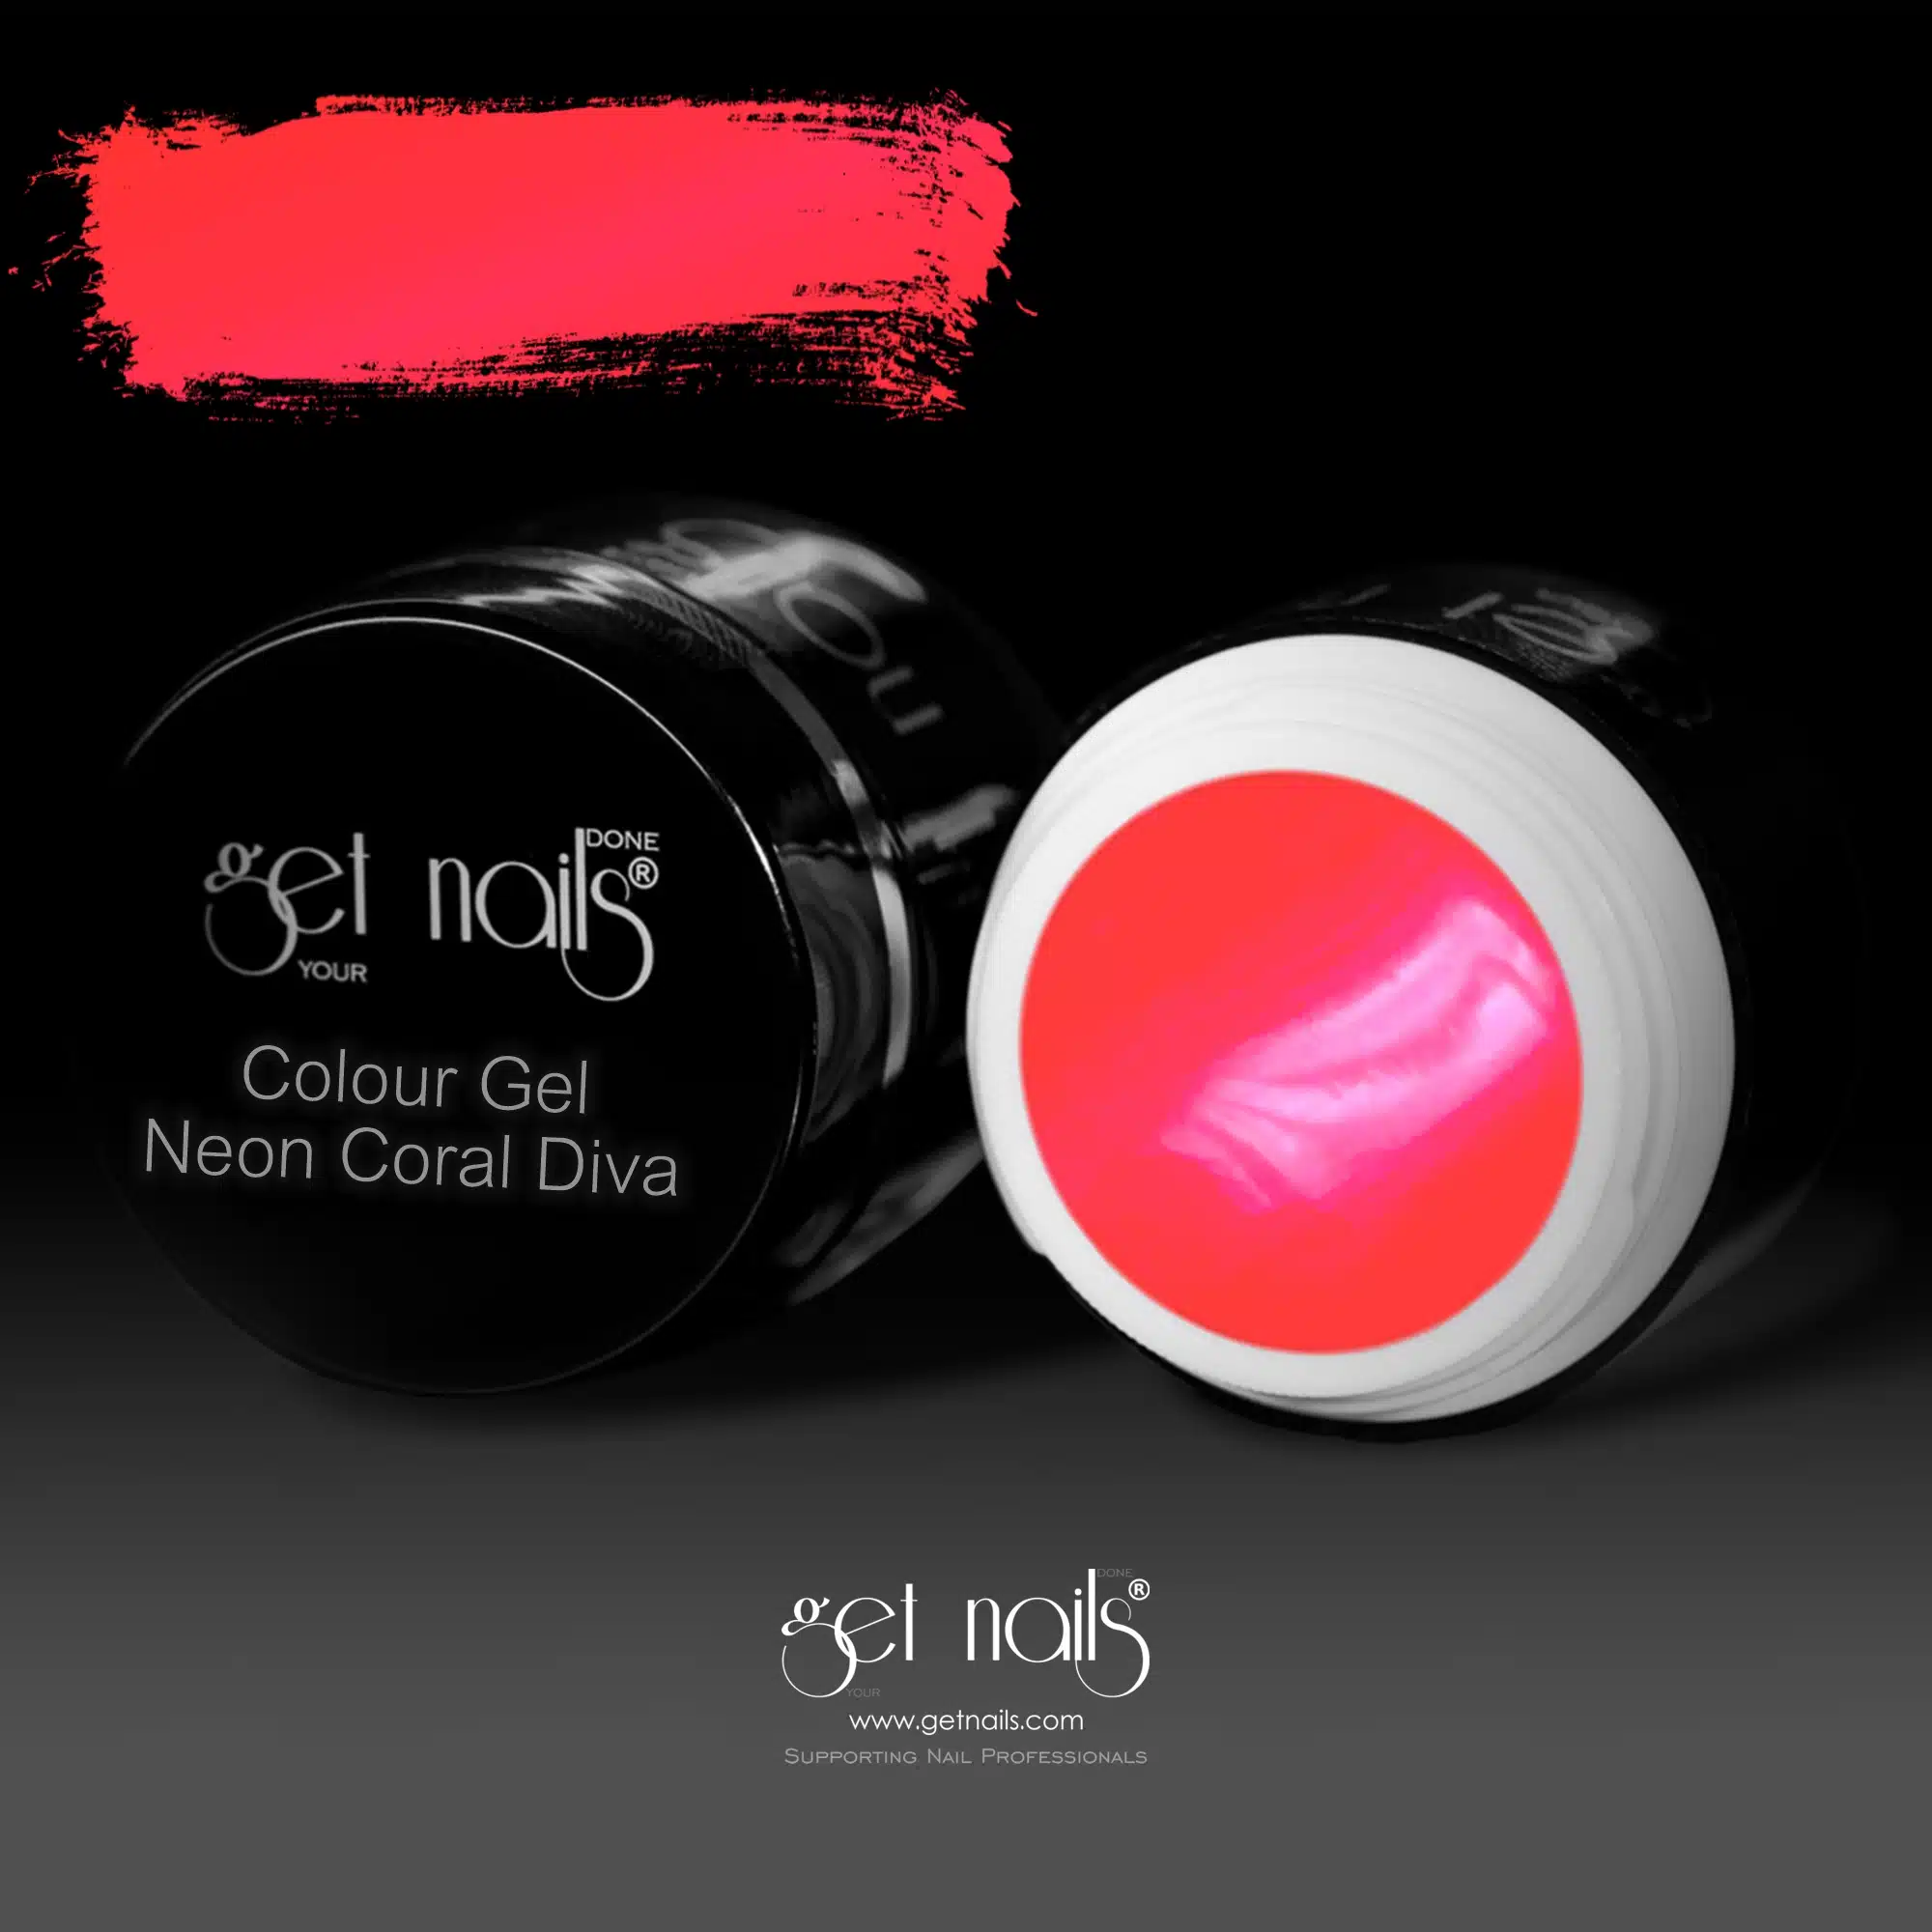 Get Nails Austria - Color Gel Neon Coral Diva 5g